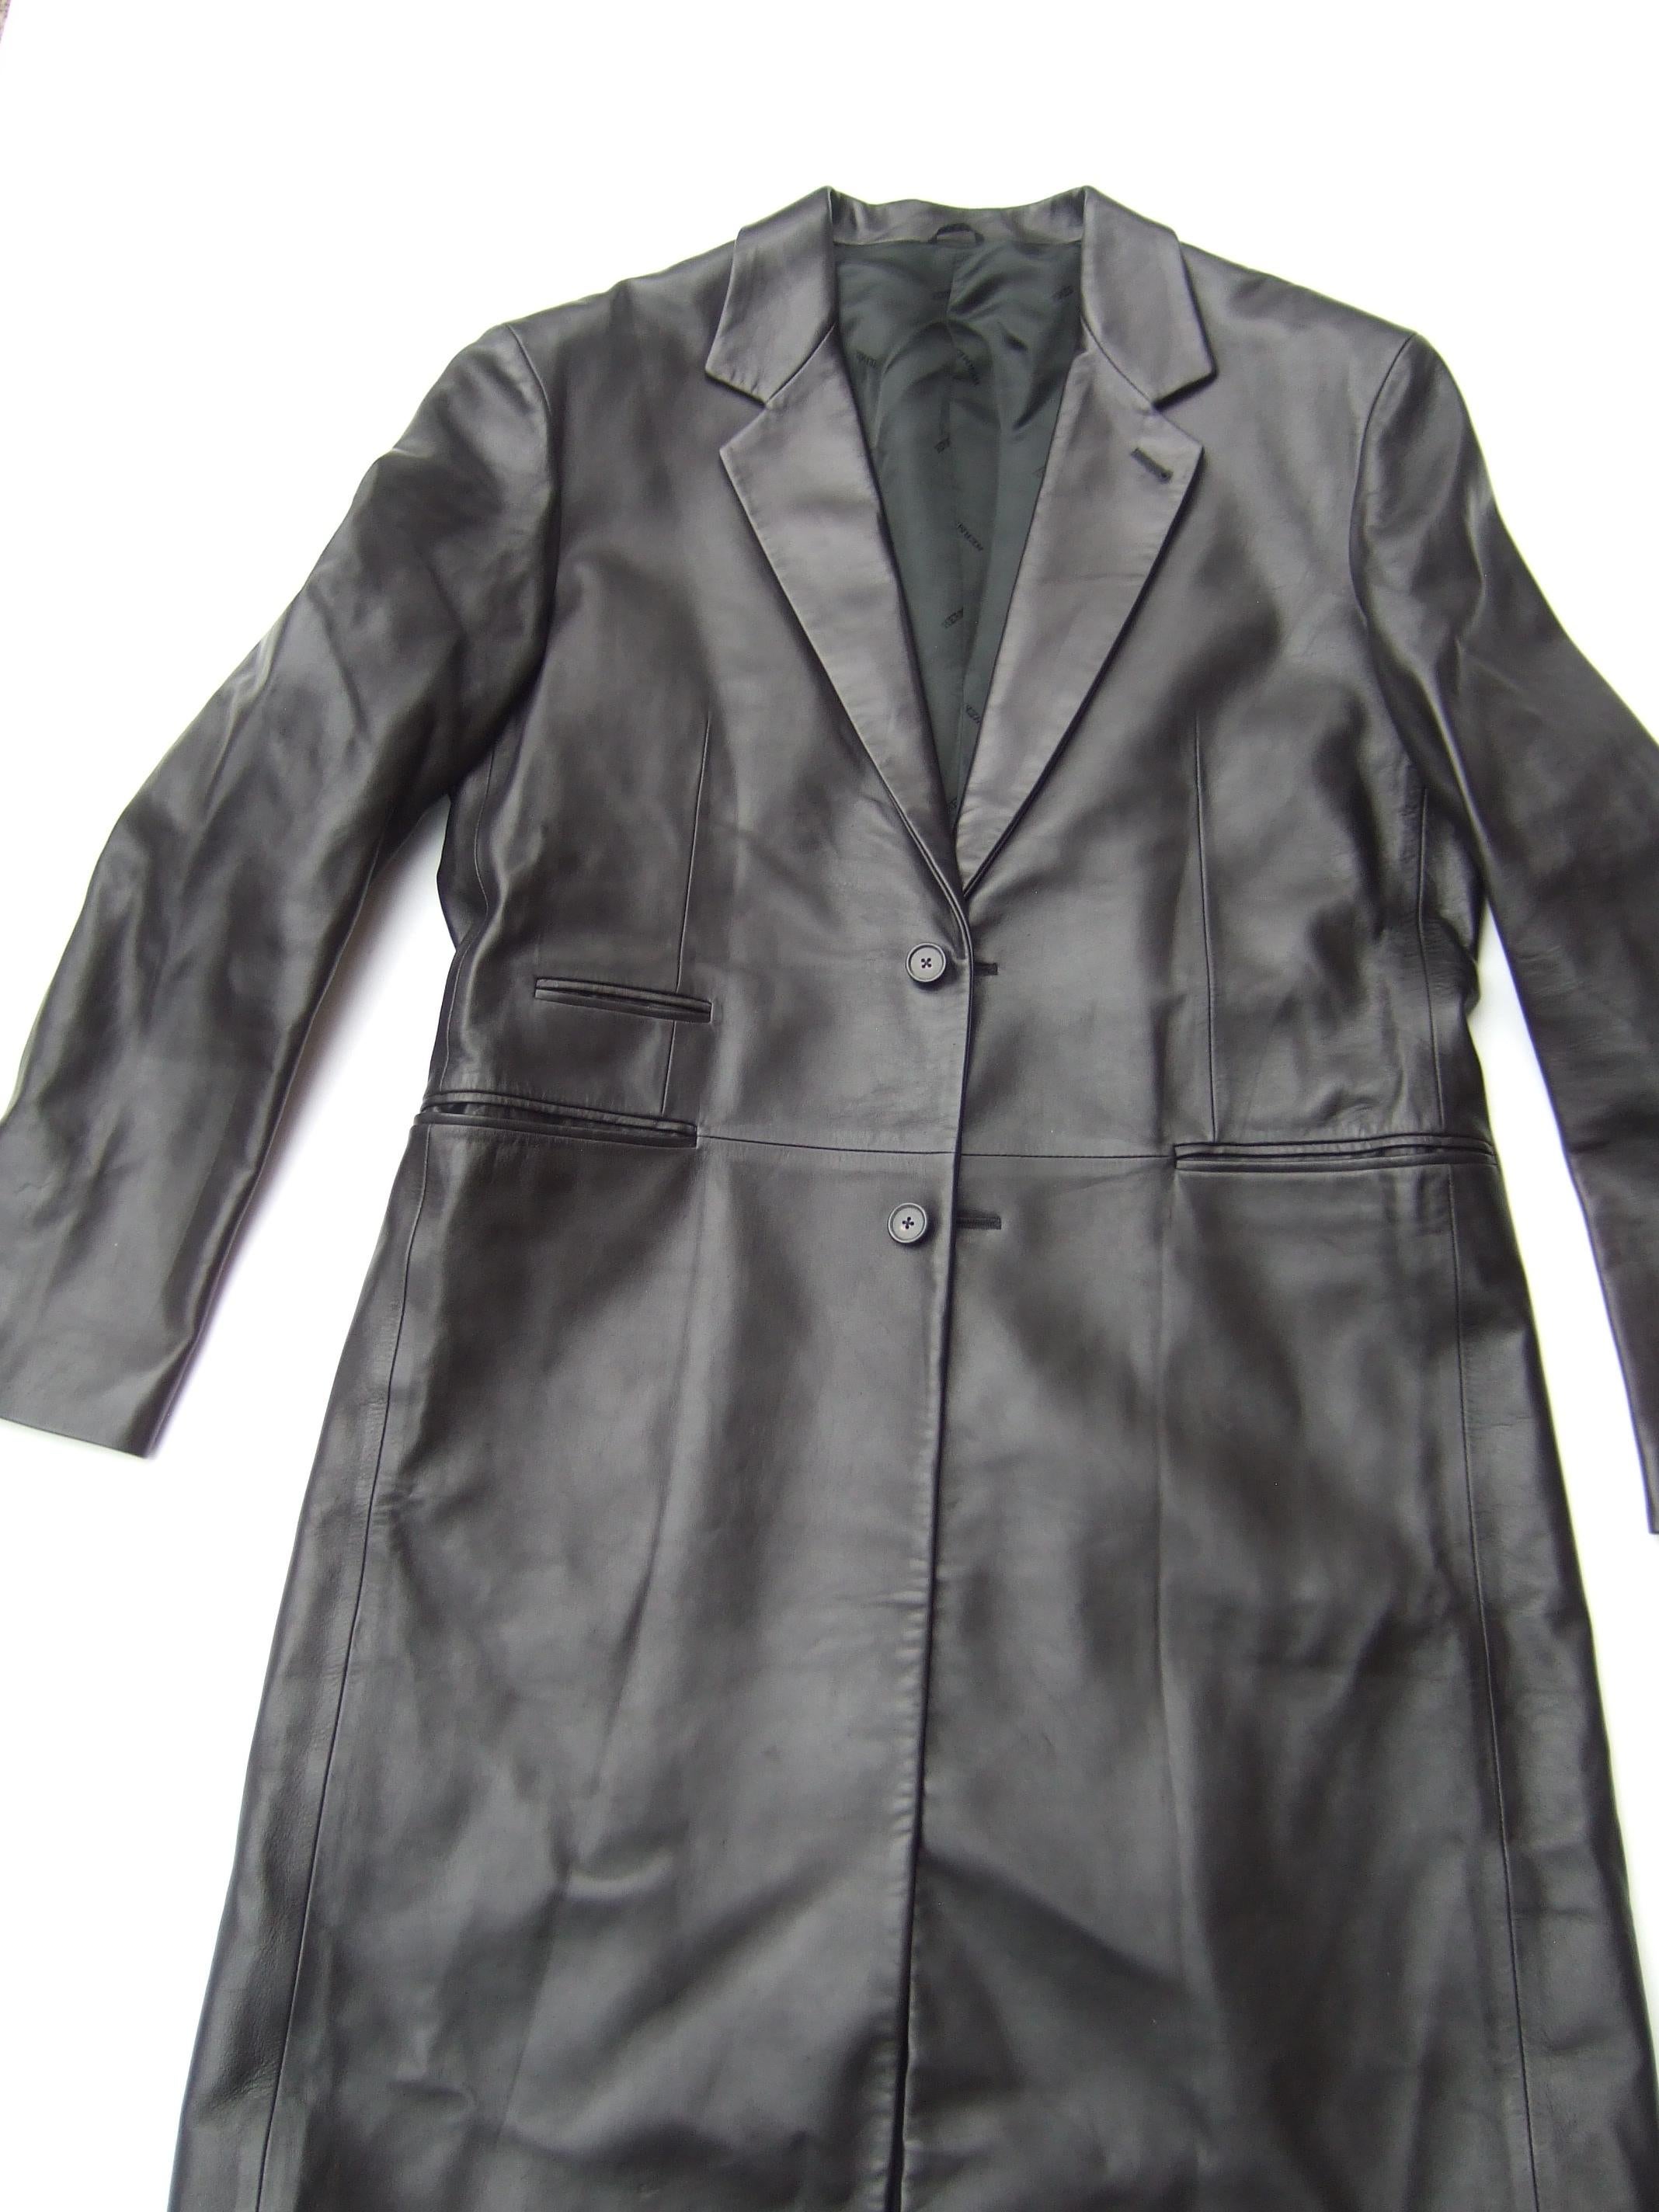 Hermes Men's Buttery Soft Black Lambskin Leather Unisex Coat Size 54 c 21st c  For Sale 3